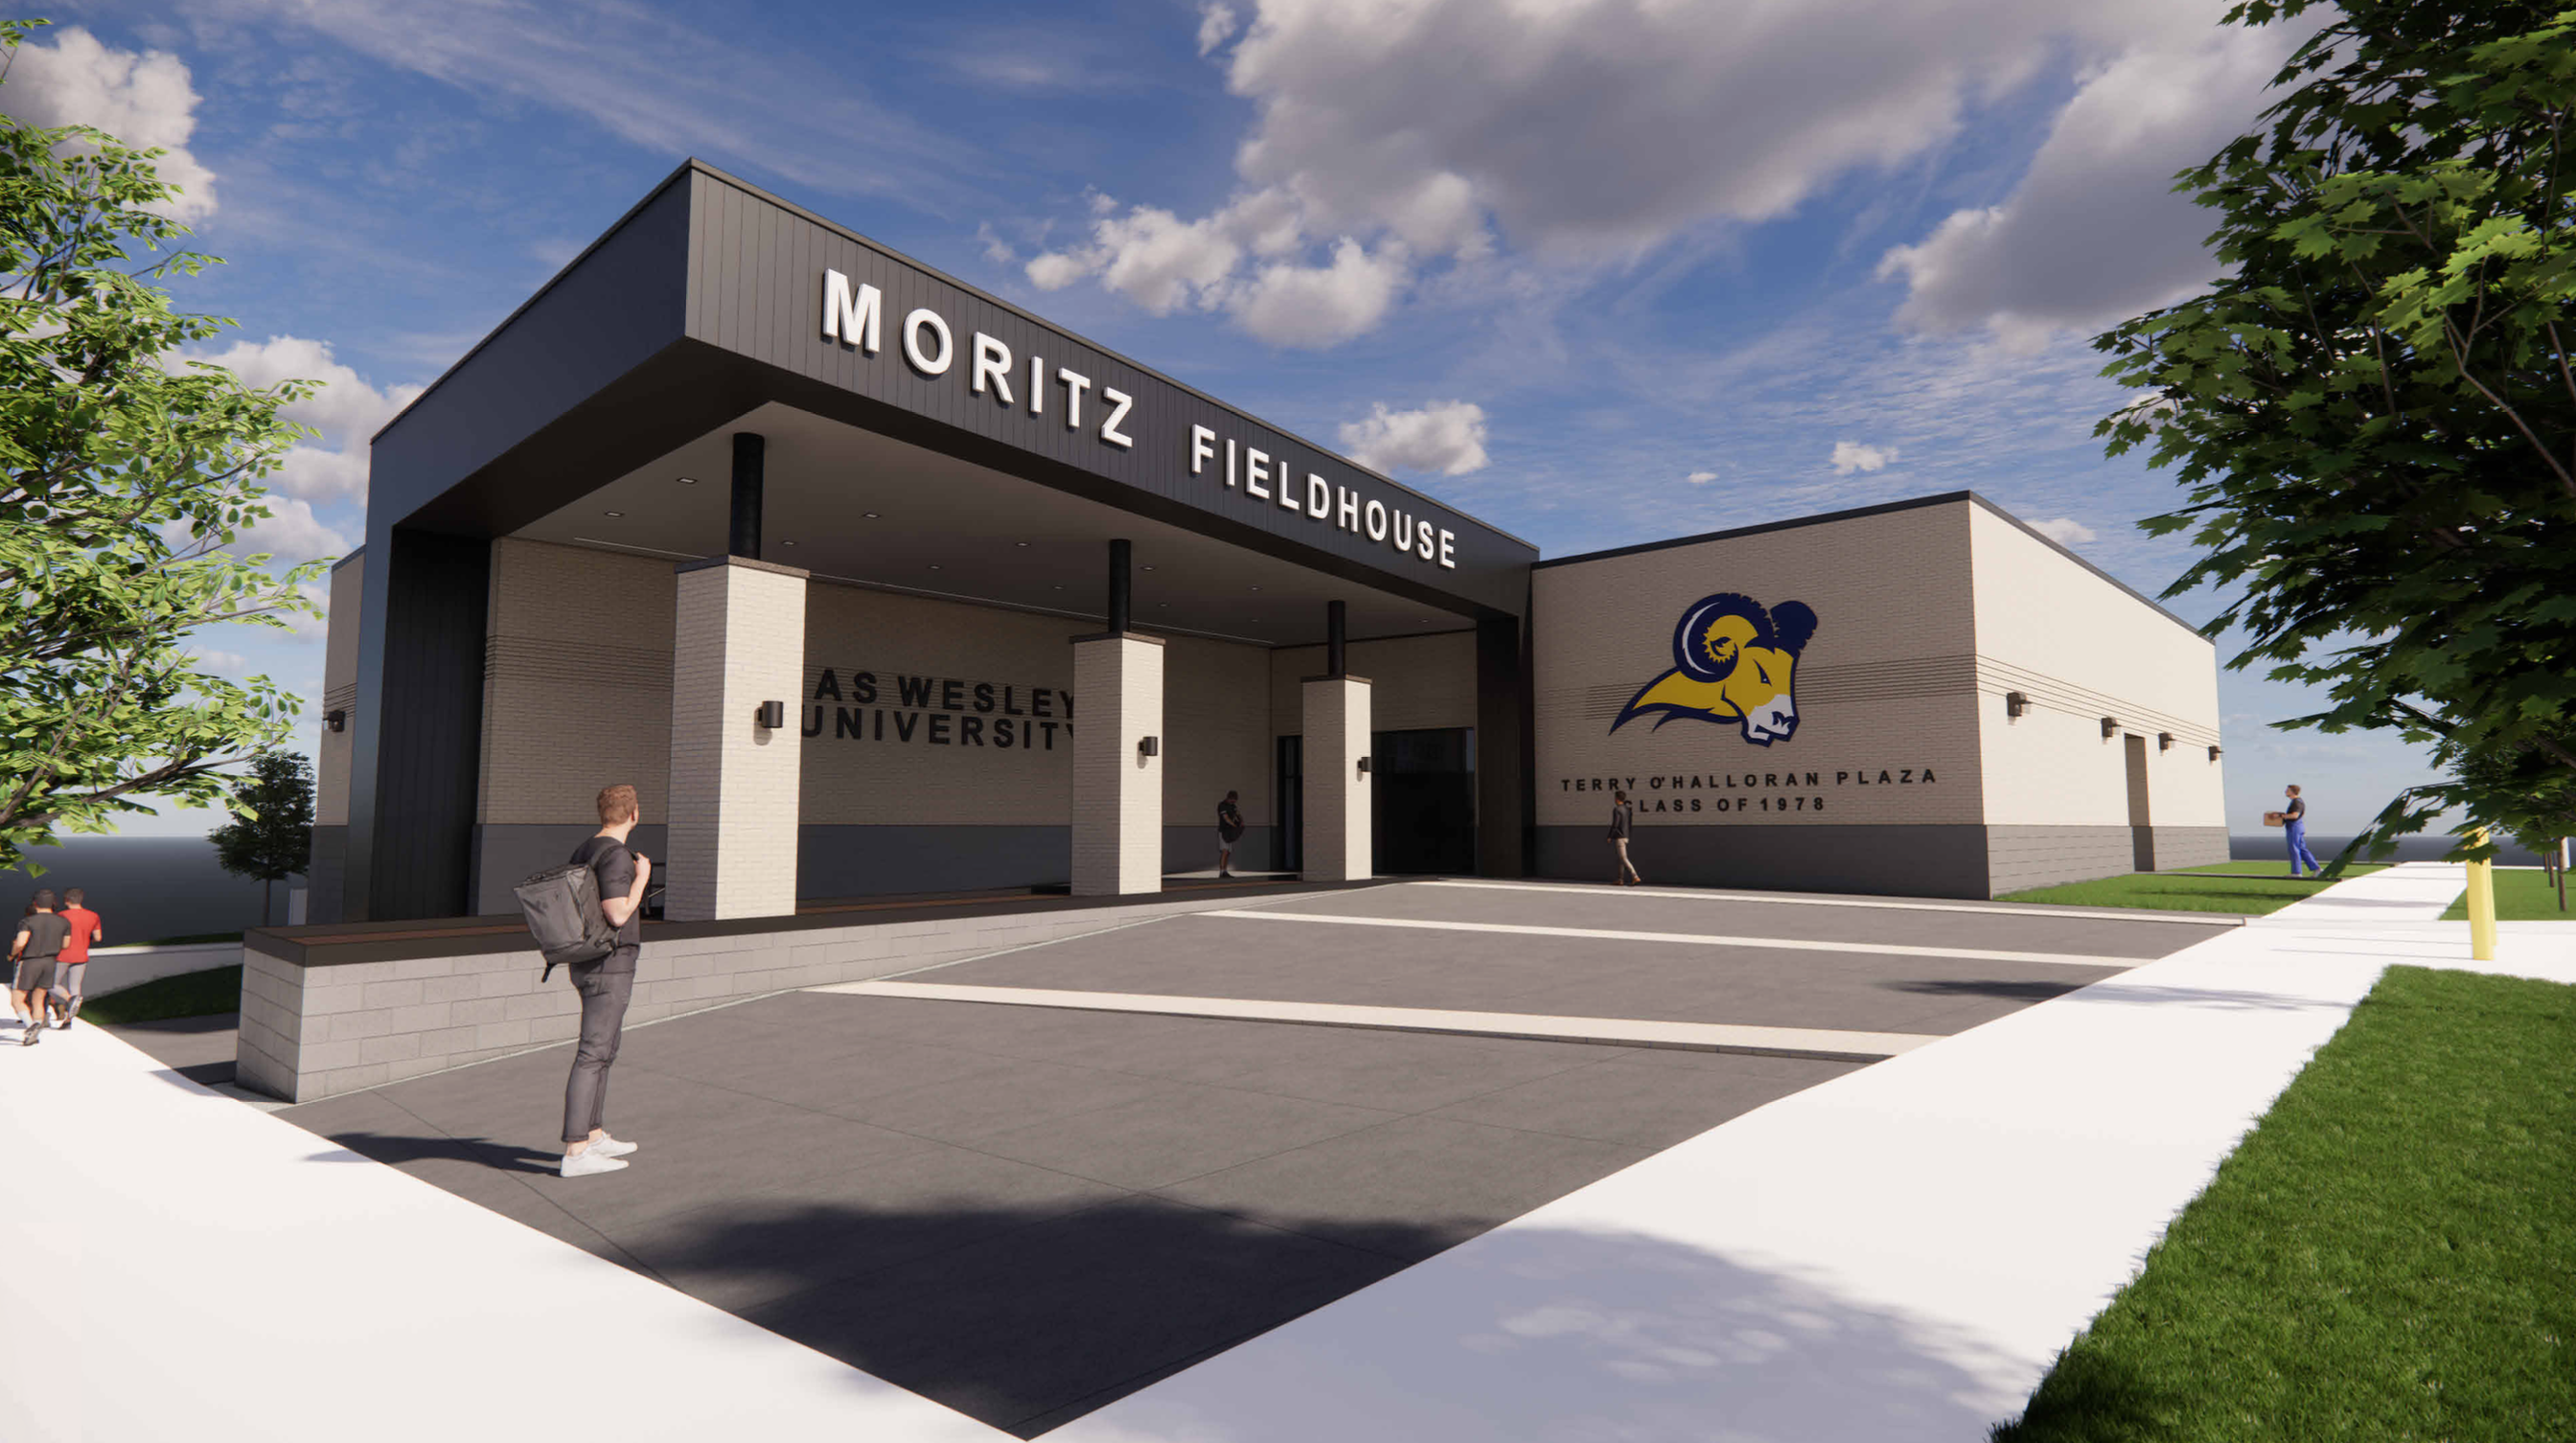 Rendering of the Moritz Fieldhouse